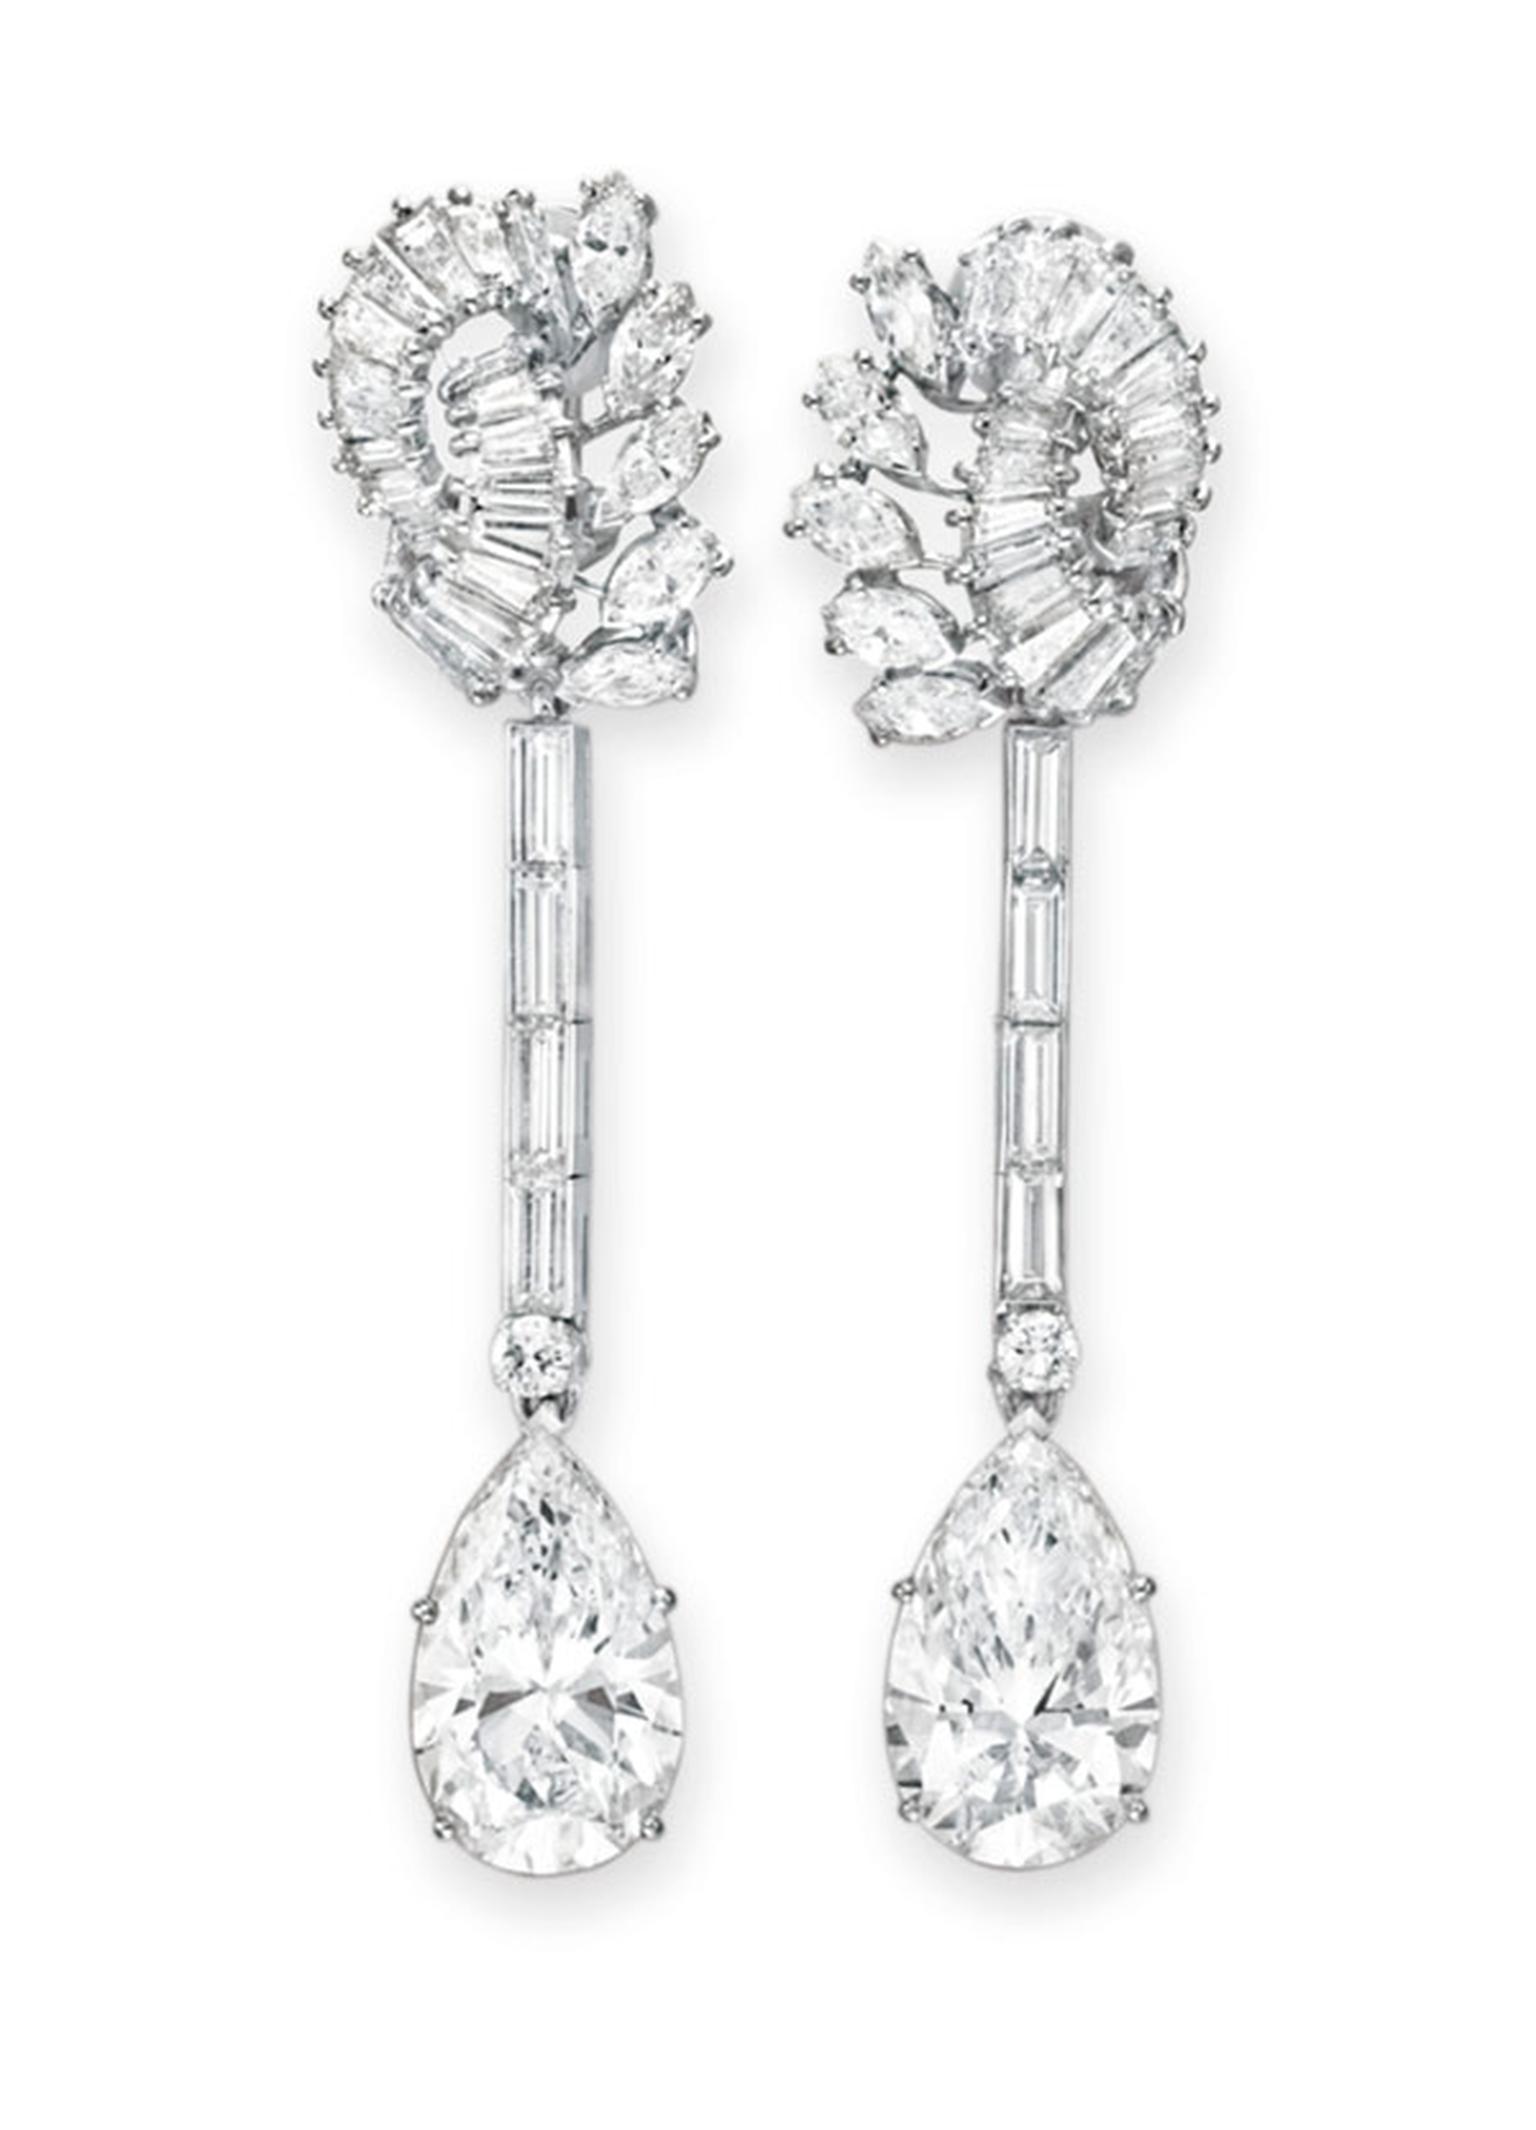 Christies-Pair-of-Pear-Shaped-Diamond-Ear-Pendants.jpg